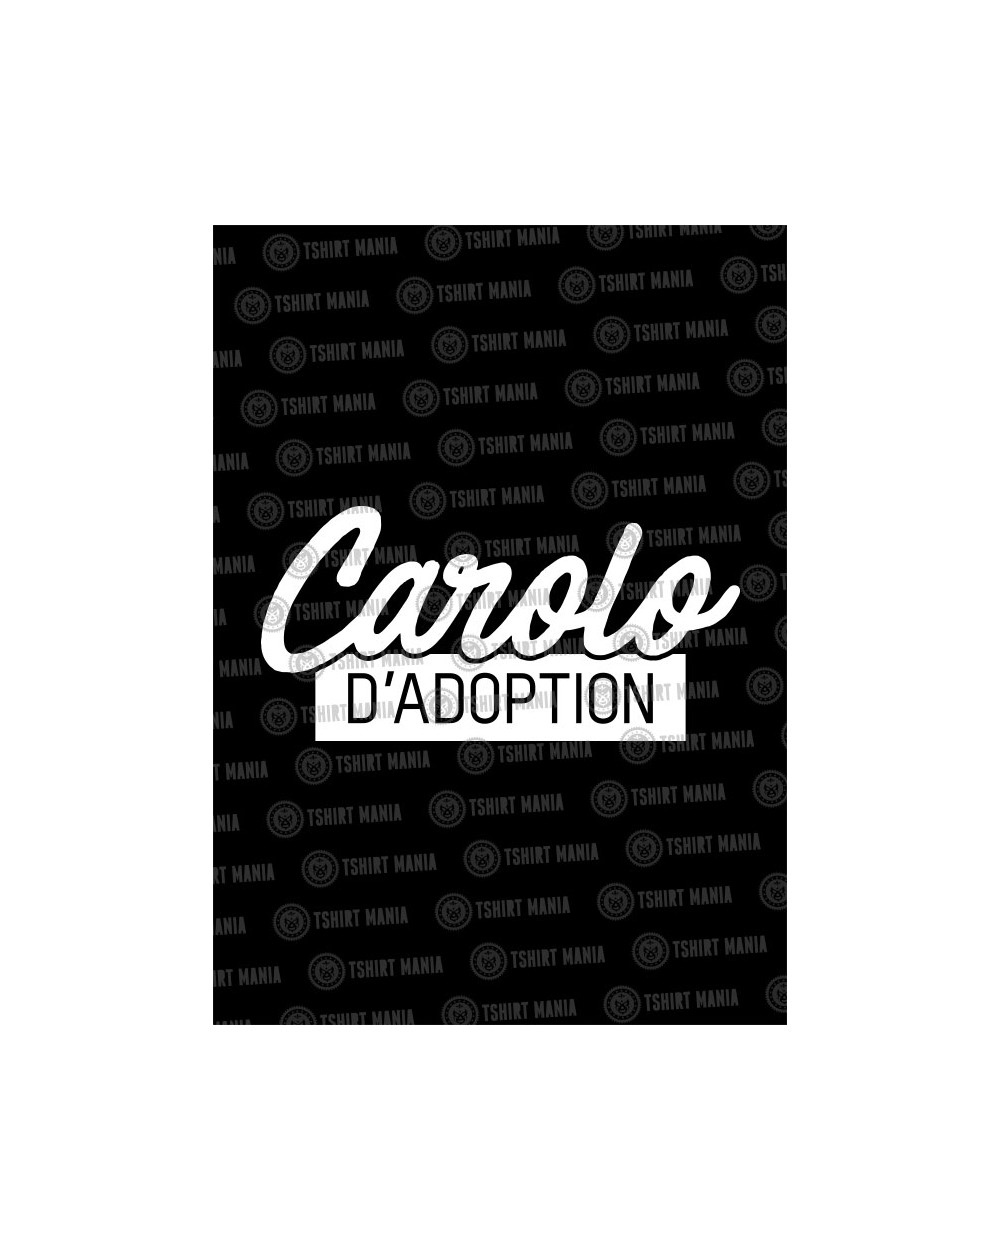 Carolo d'adoption